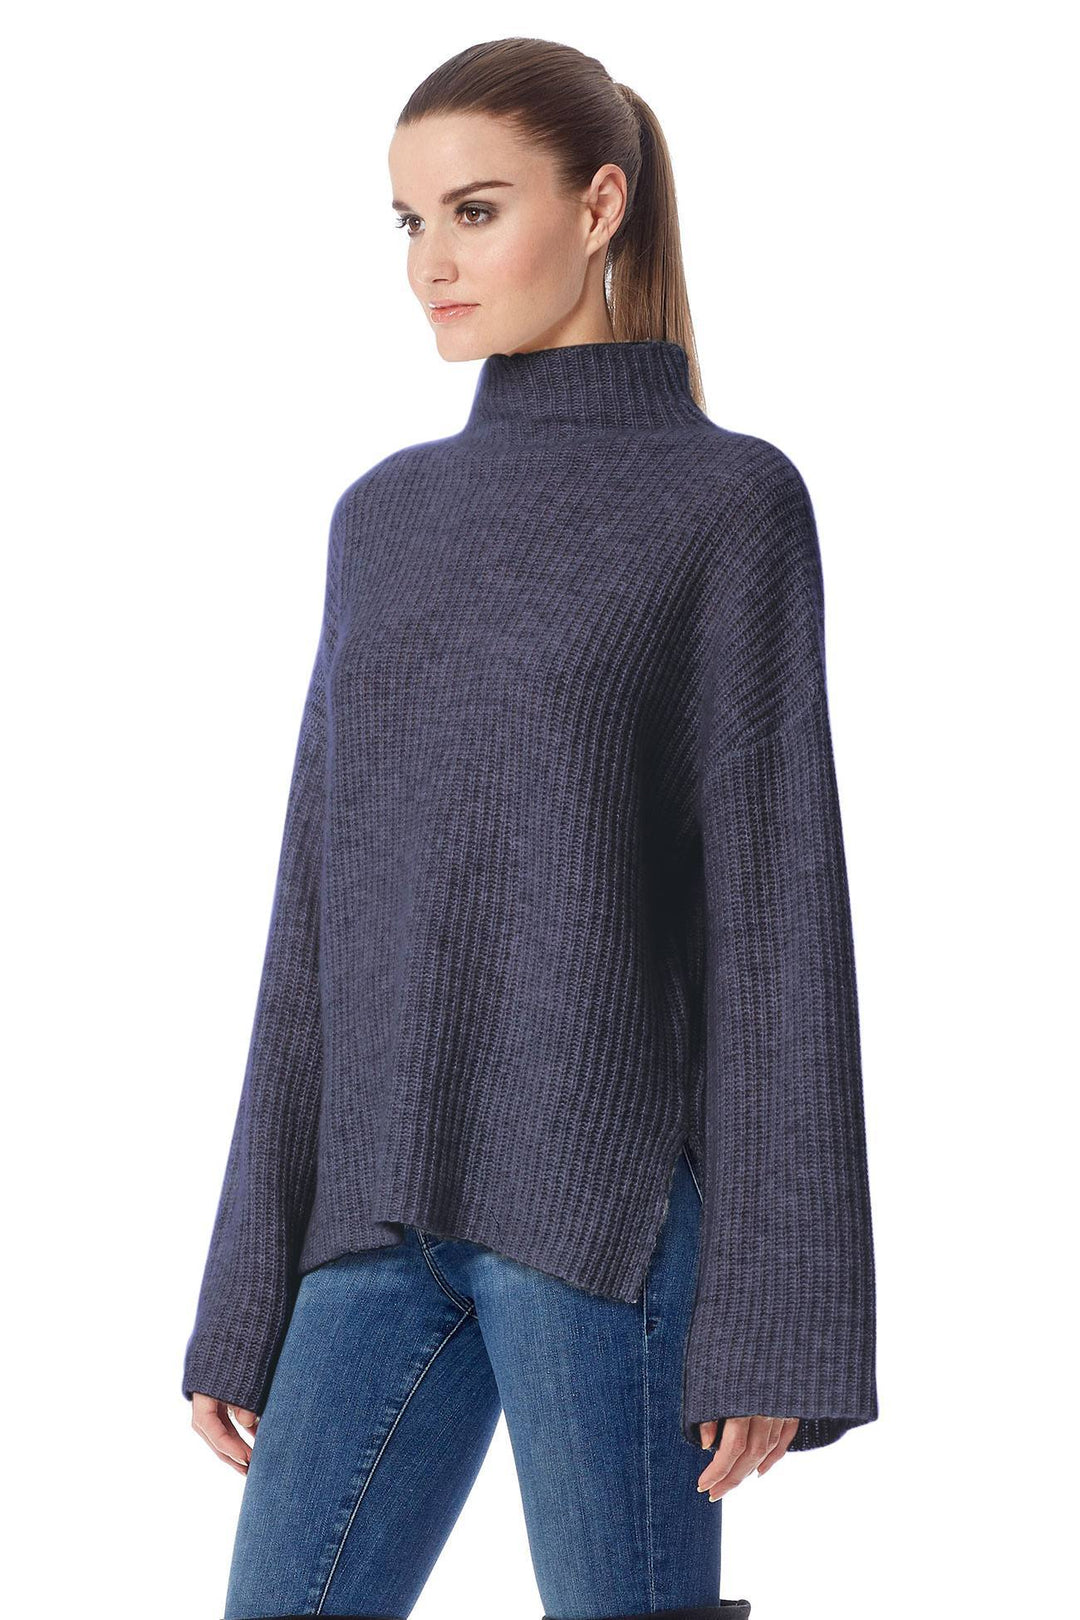 360 Sweater- Doris Indigo